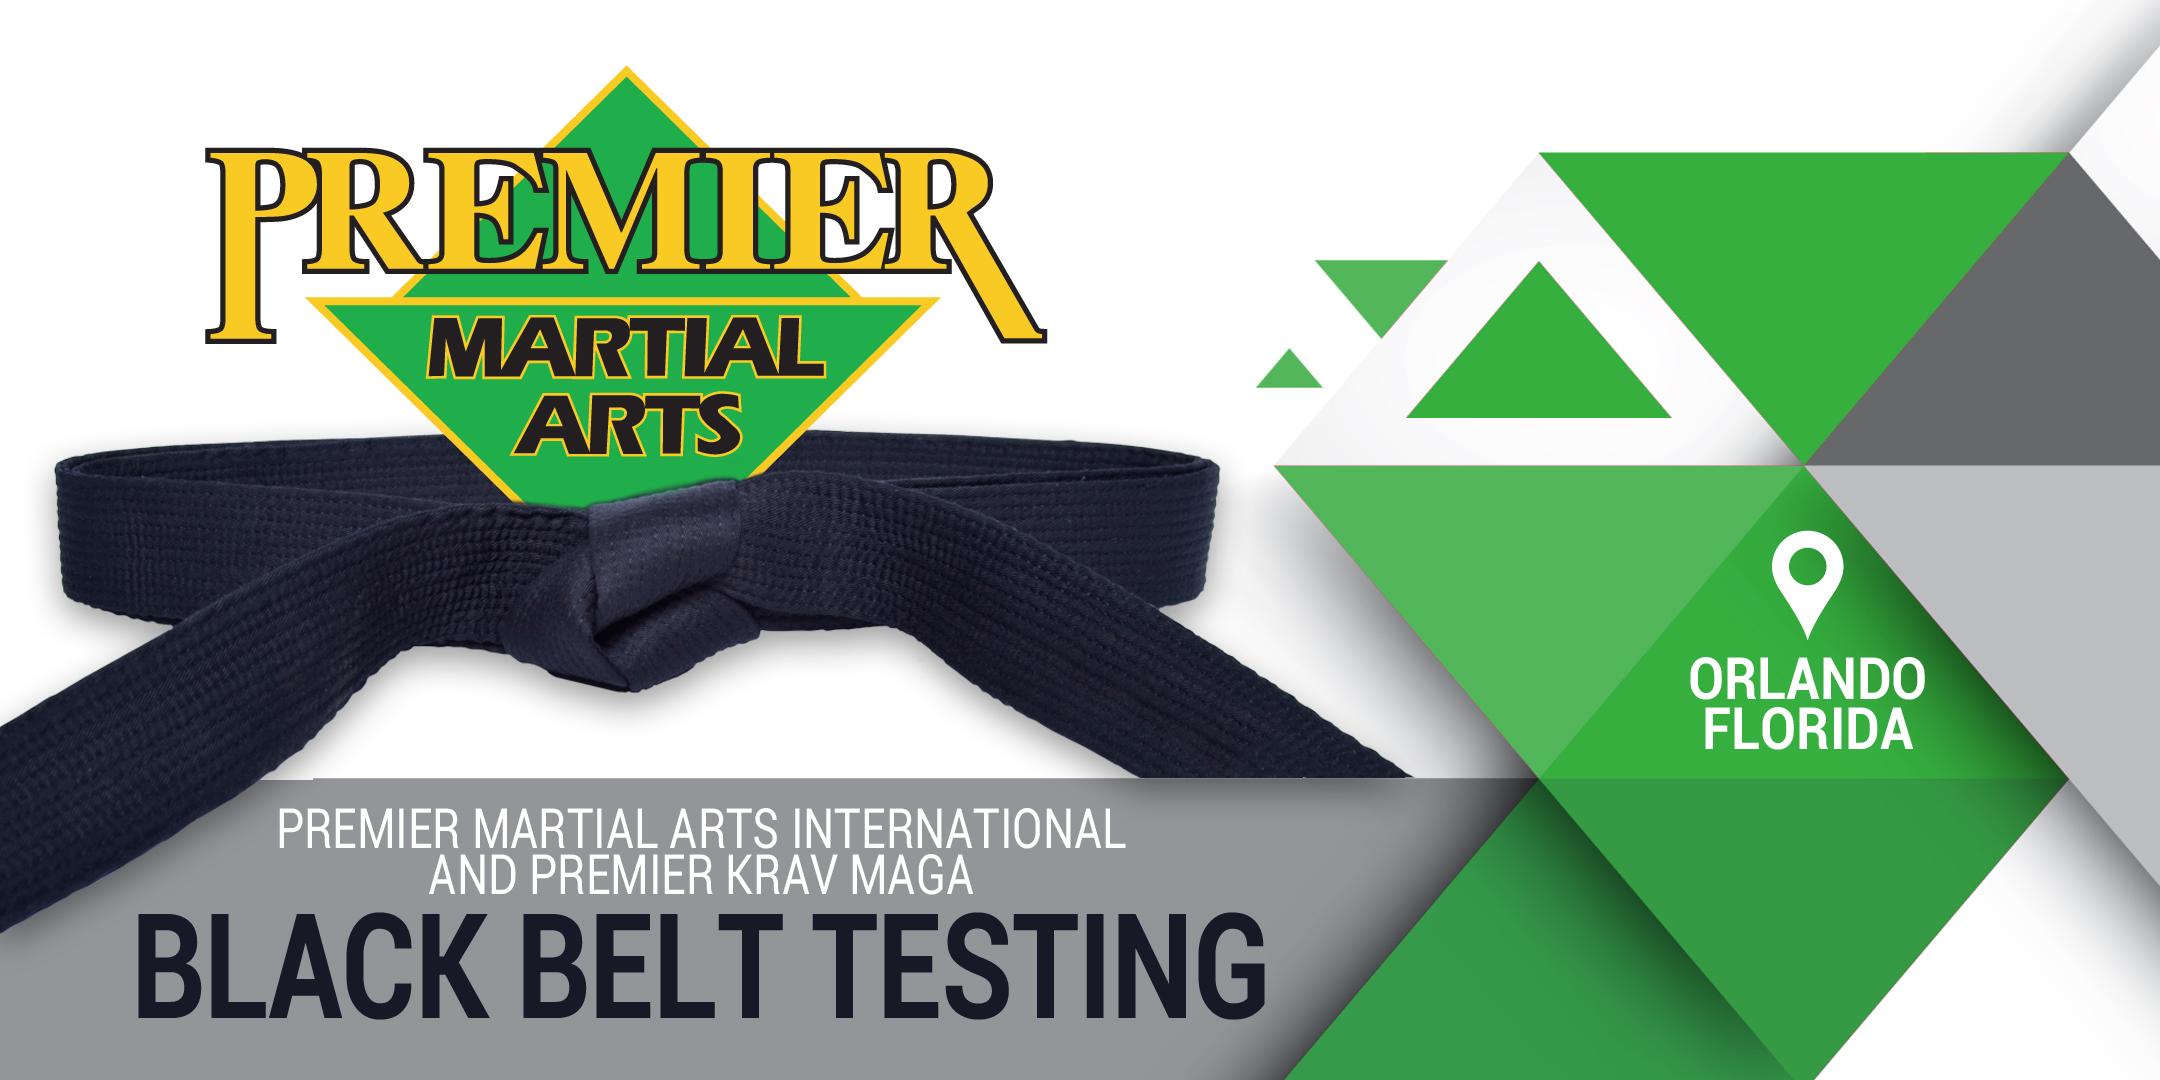 2020 Annual Premier Martial Arts International and Premier Krav Maga Black Belt Testing